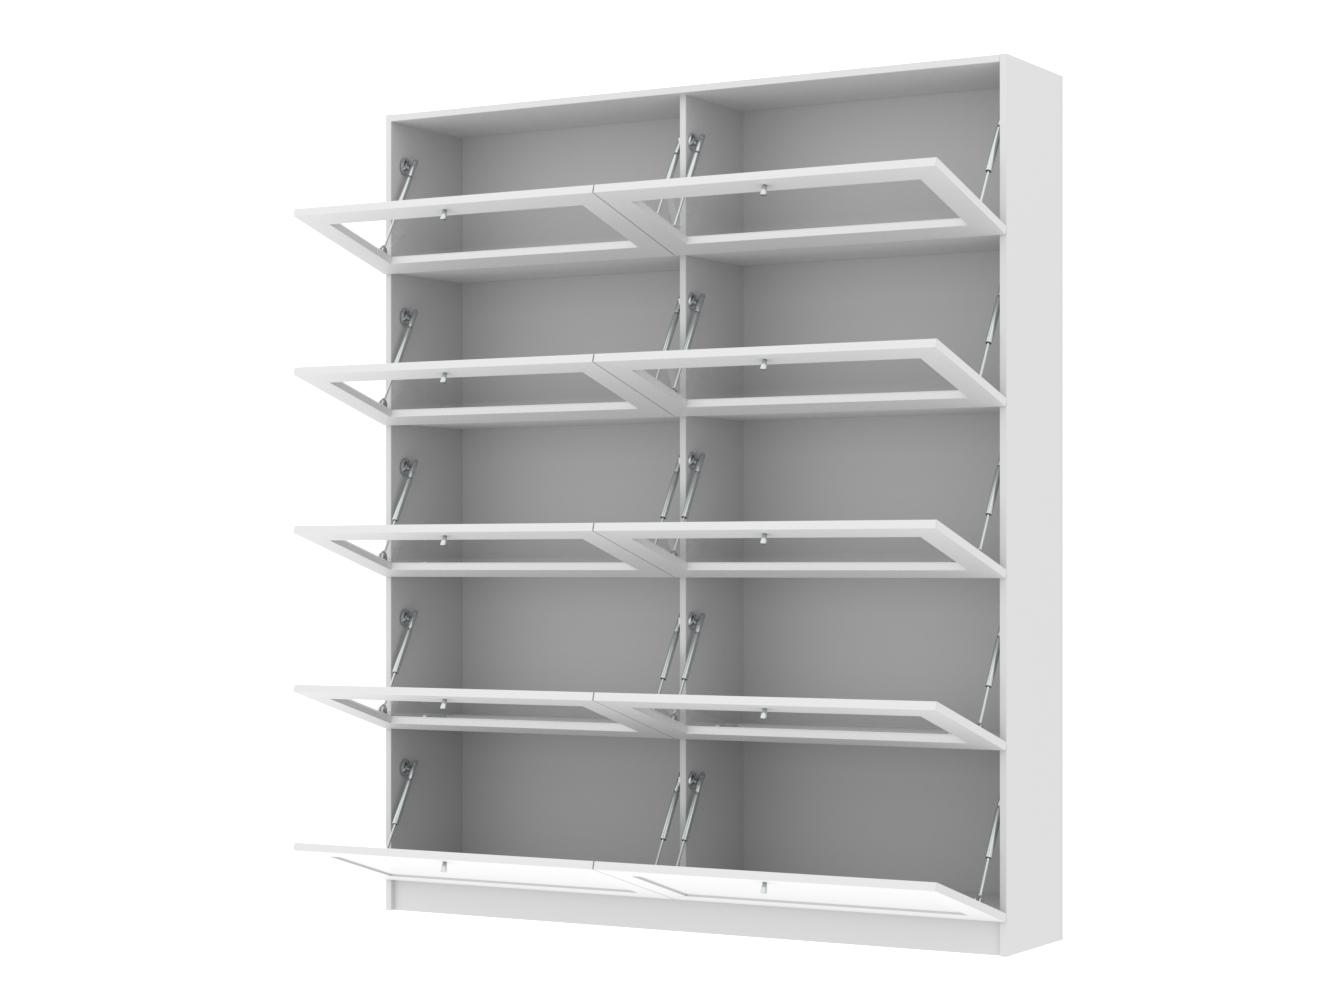  Книжный шкаф Билли 376 white ИКЕА (IKEA) изображение товара